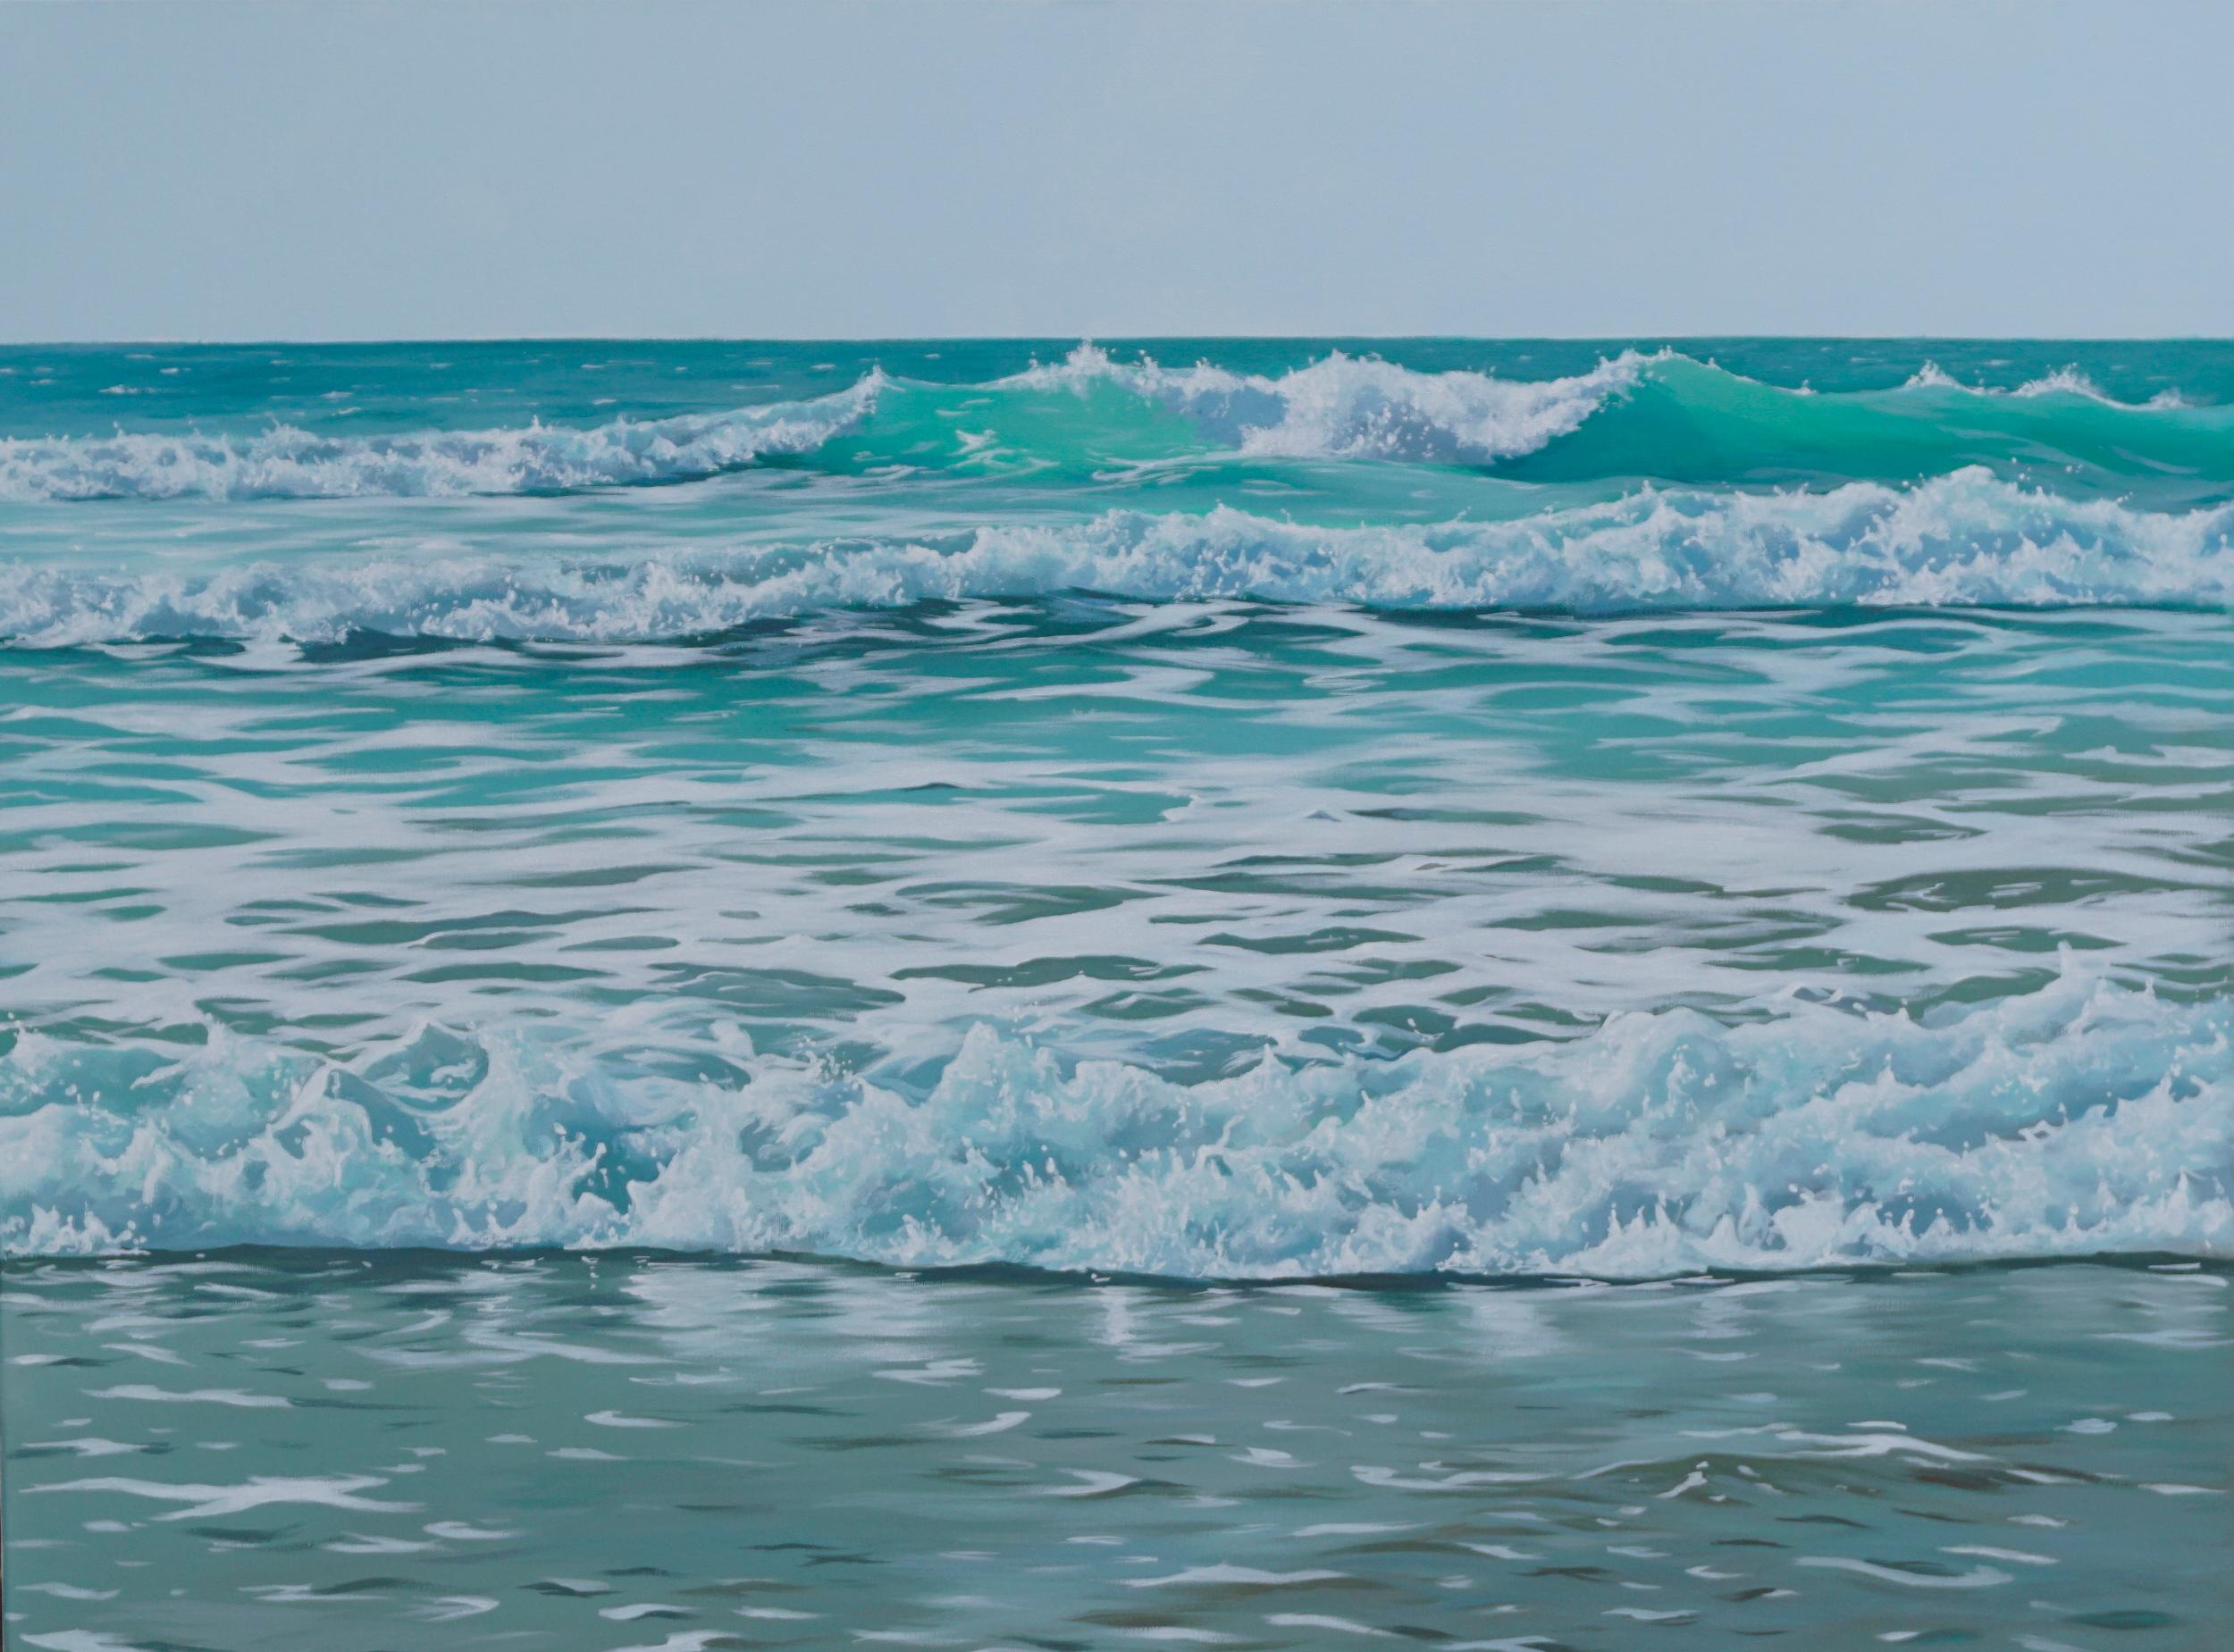 Jo Quigley Still-Life Painting – Smaragdwellen, Acrylgemälde von Meereslandschaften, zeitgenössisches Landschaftsgemälde